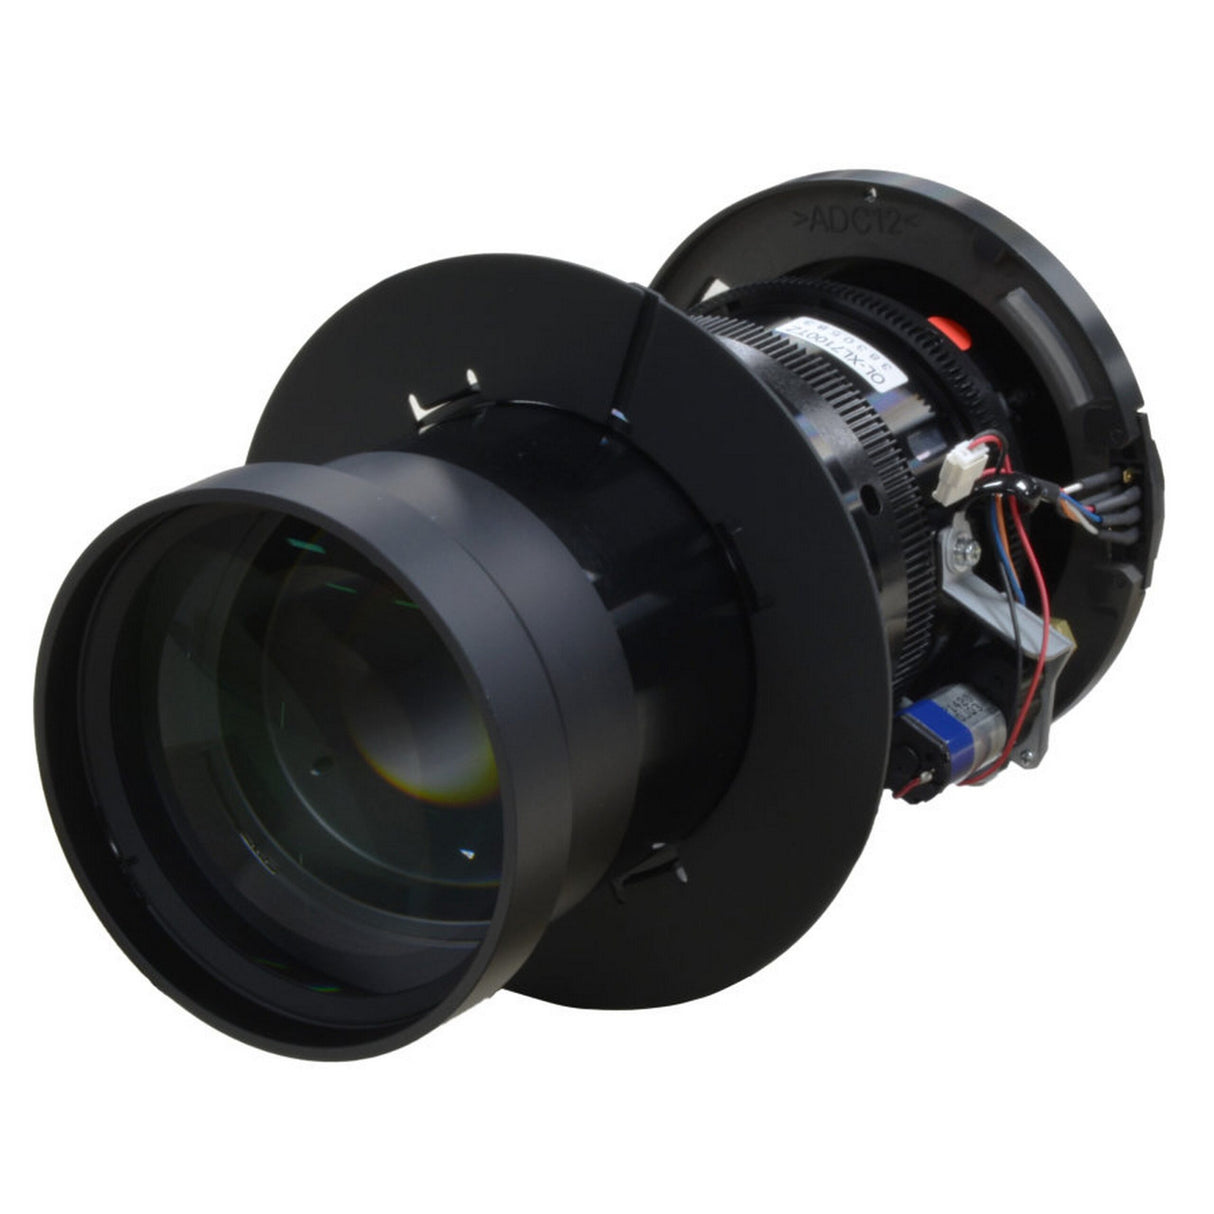 Eiki AH-E23020 Projector Lens for EK-510U/L, EK-500U/L, EK-511W/L, EK-501W/L, EK-512X/L